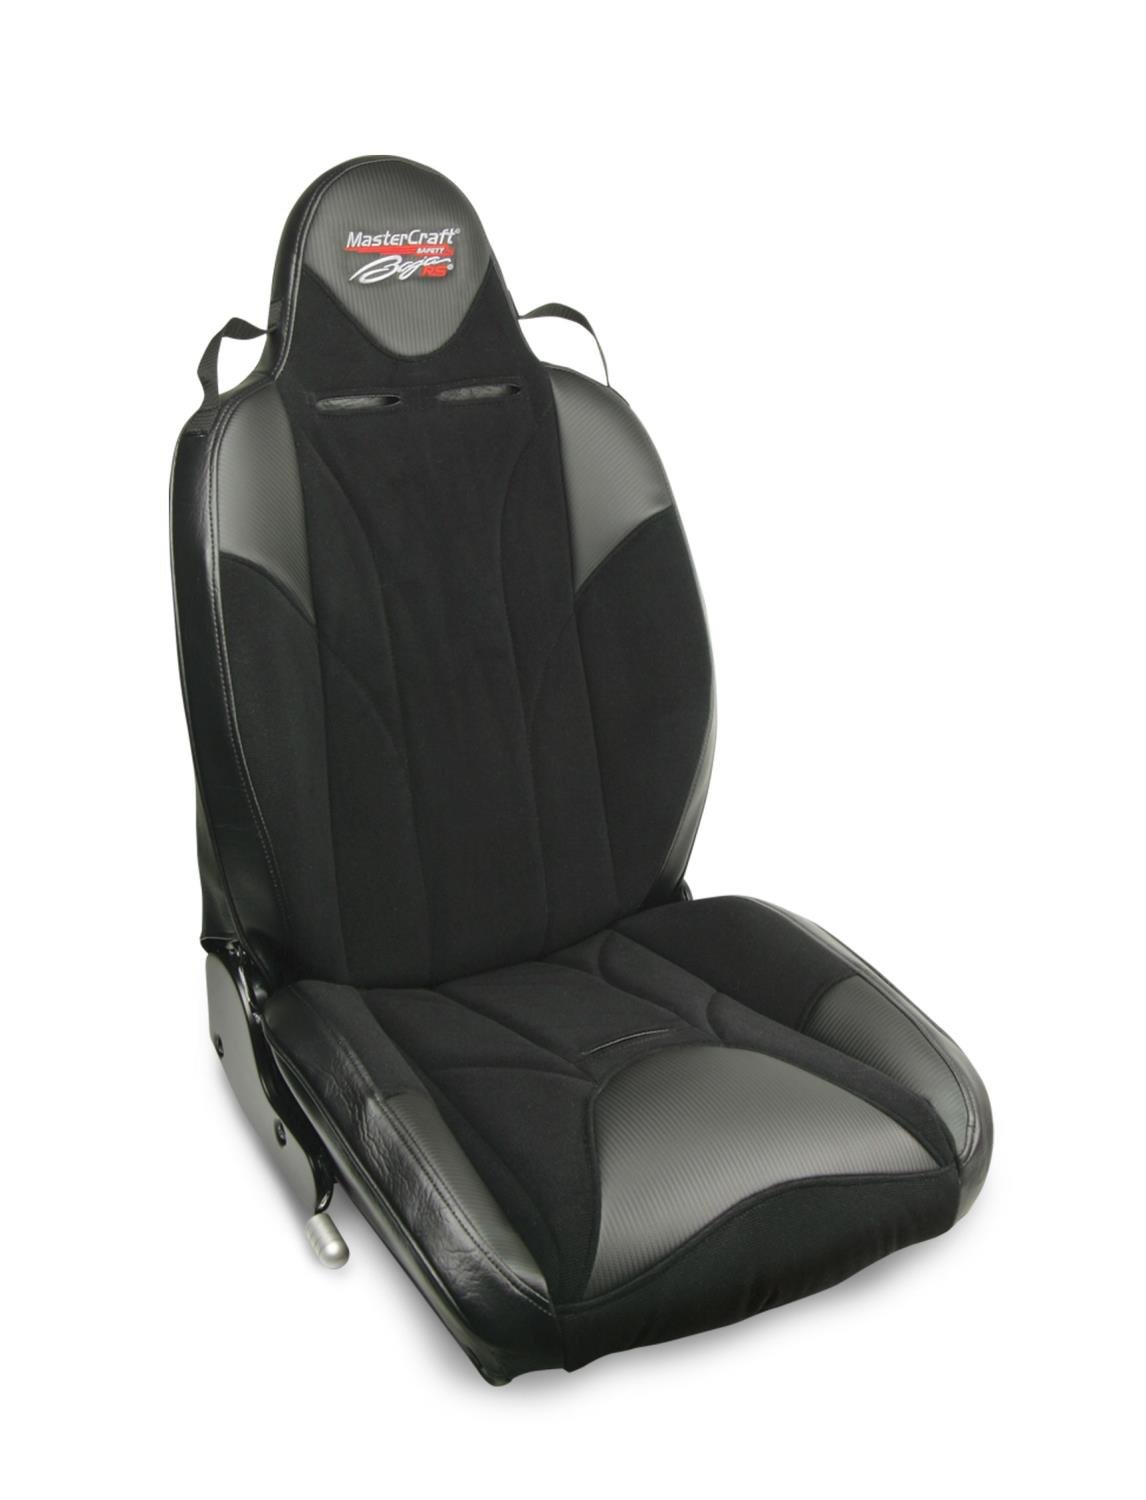 506124 MasterCraft Baja RS w/Fixed Headrest, DirtSport, Black